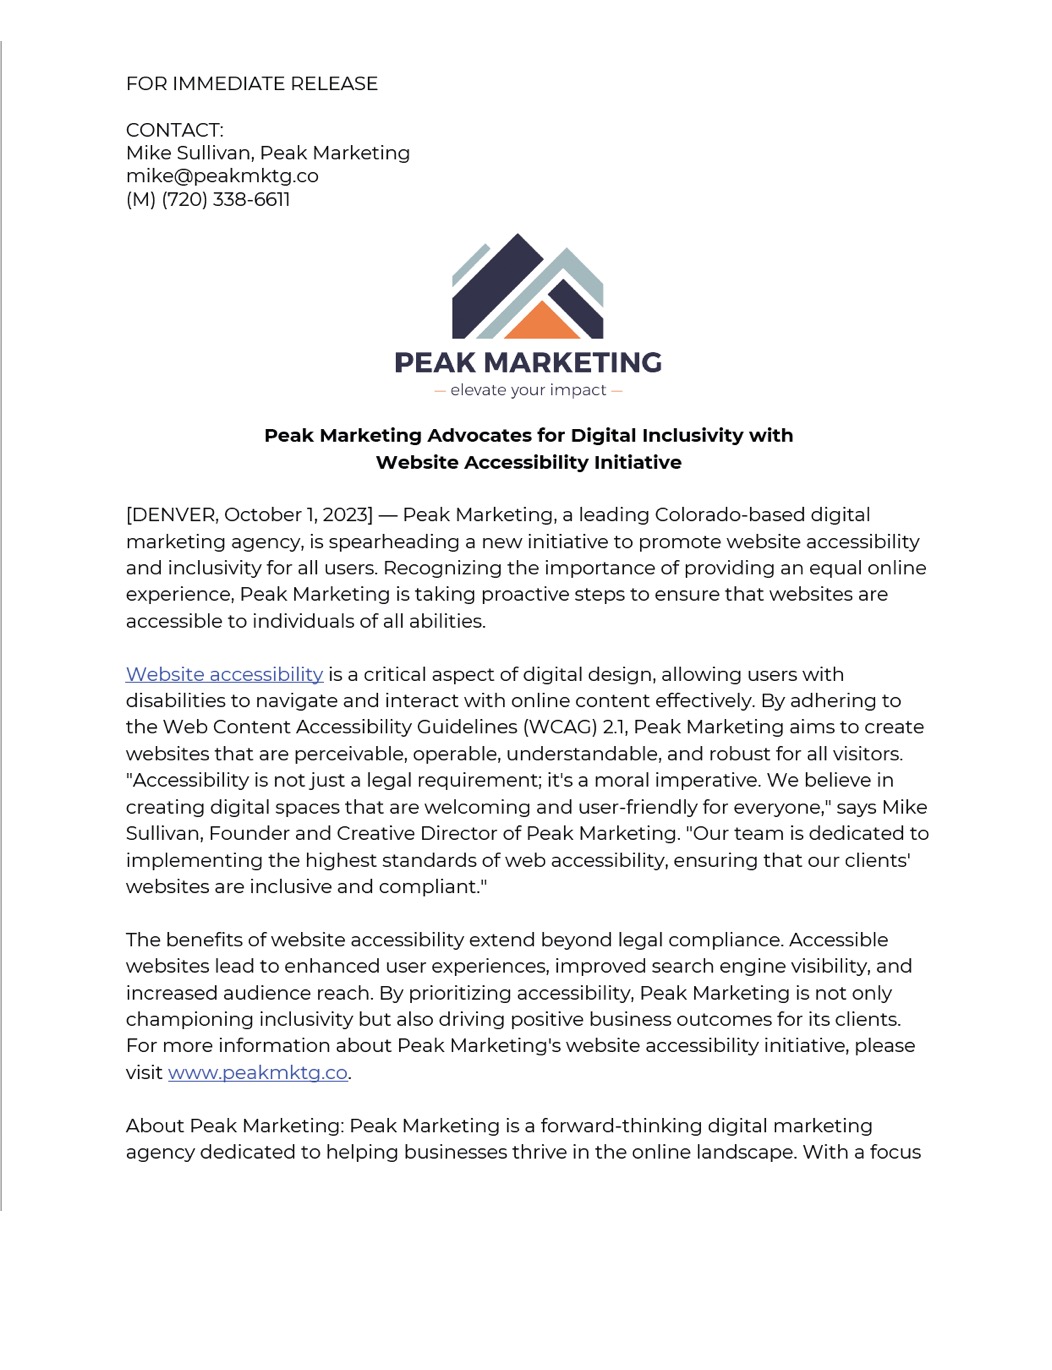 Website Accessibility Peak Marketing Press Release - September 2023